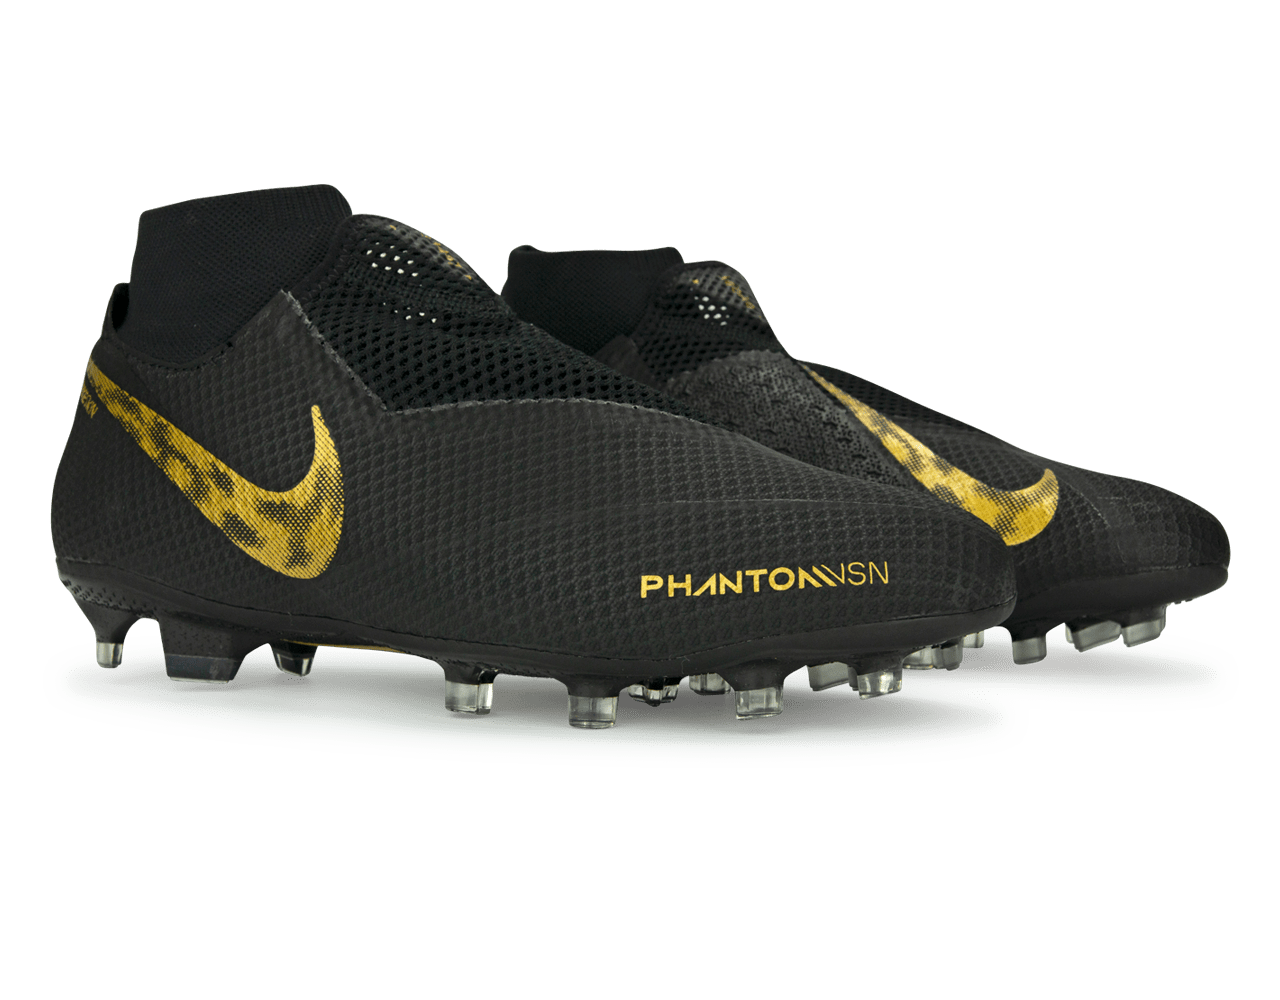 Nike Men's PhantomVSN Pro DF FG Black/Metallic Vivid Gold